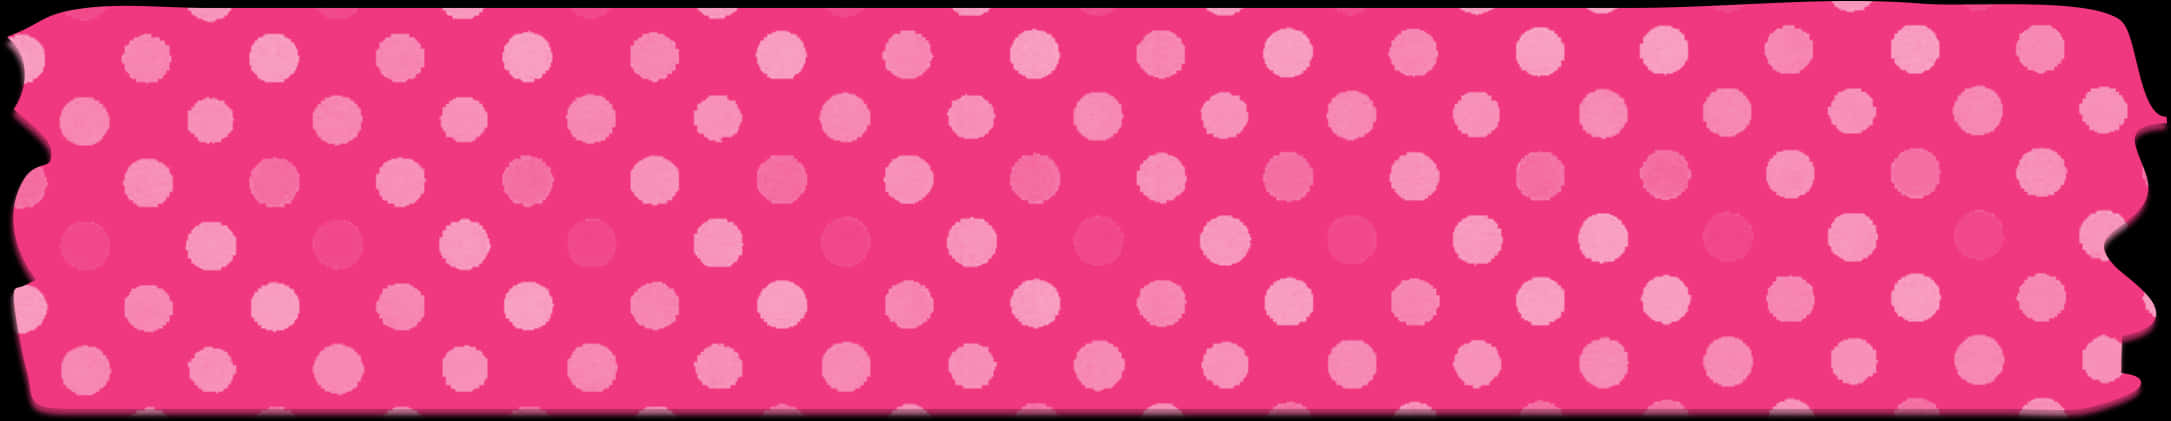 Pink Polka Dot Washi Tape PNG image